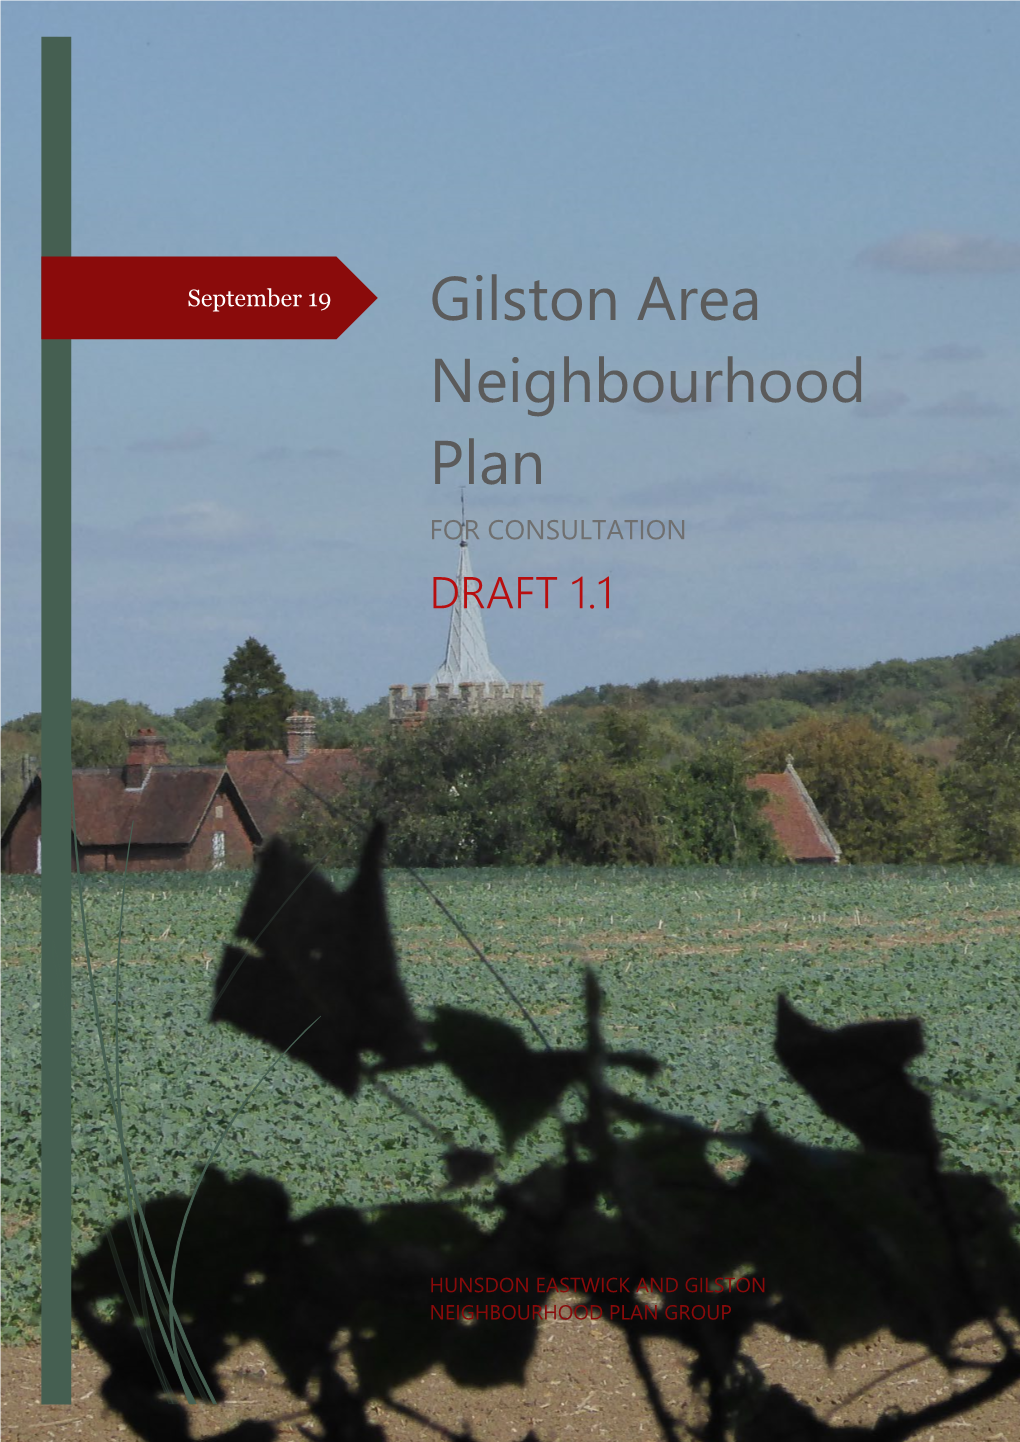 Gilston Area Neighbourhood Plan for CONSULTATION DRAFT 1.1